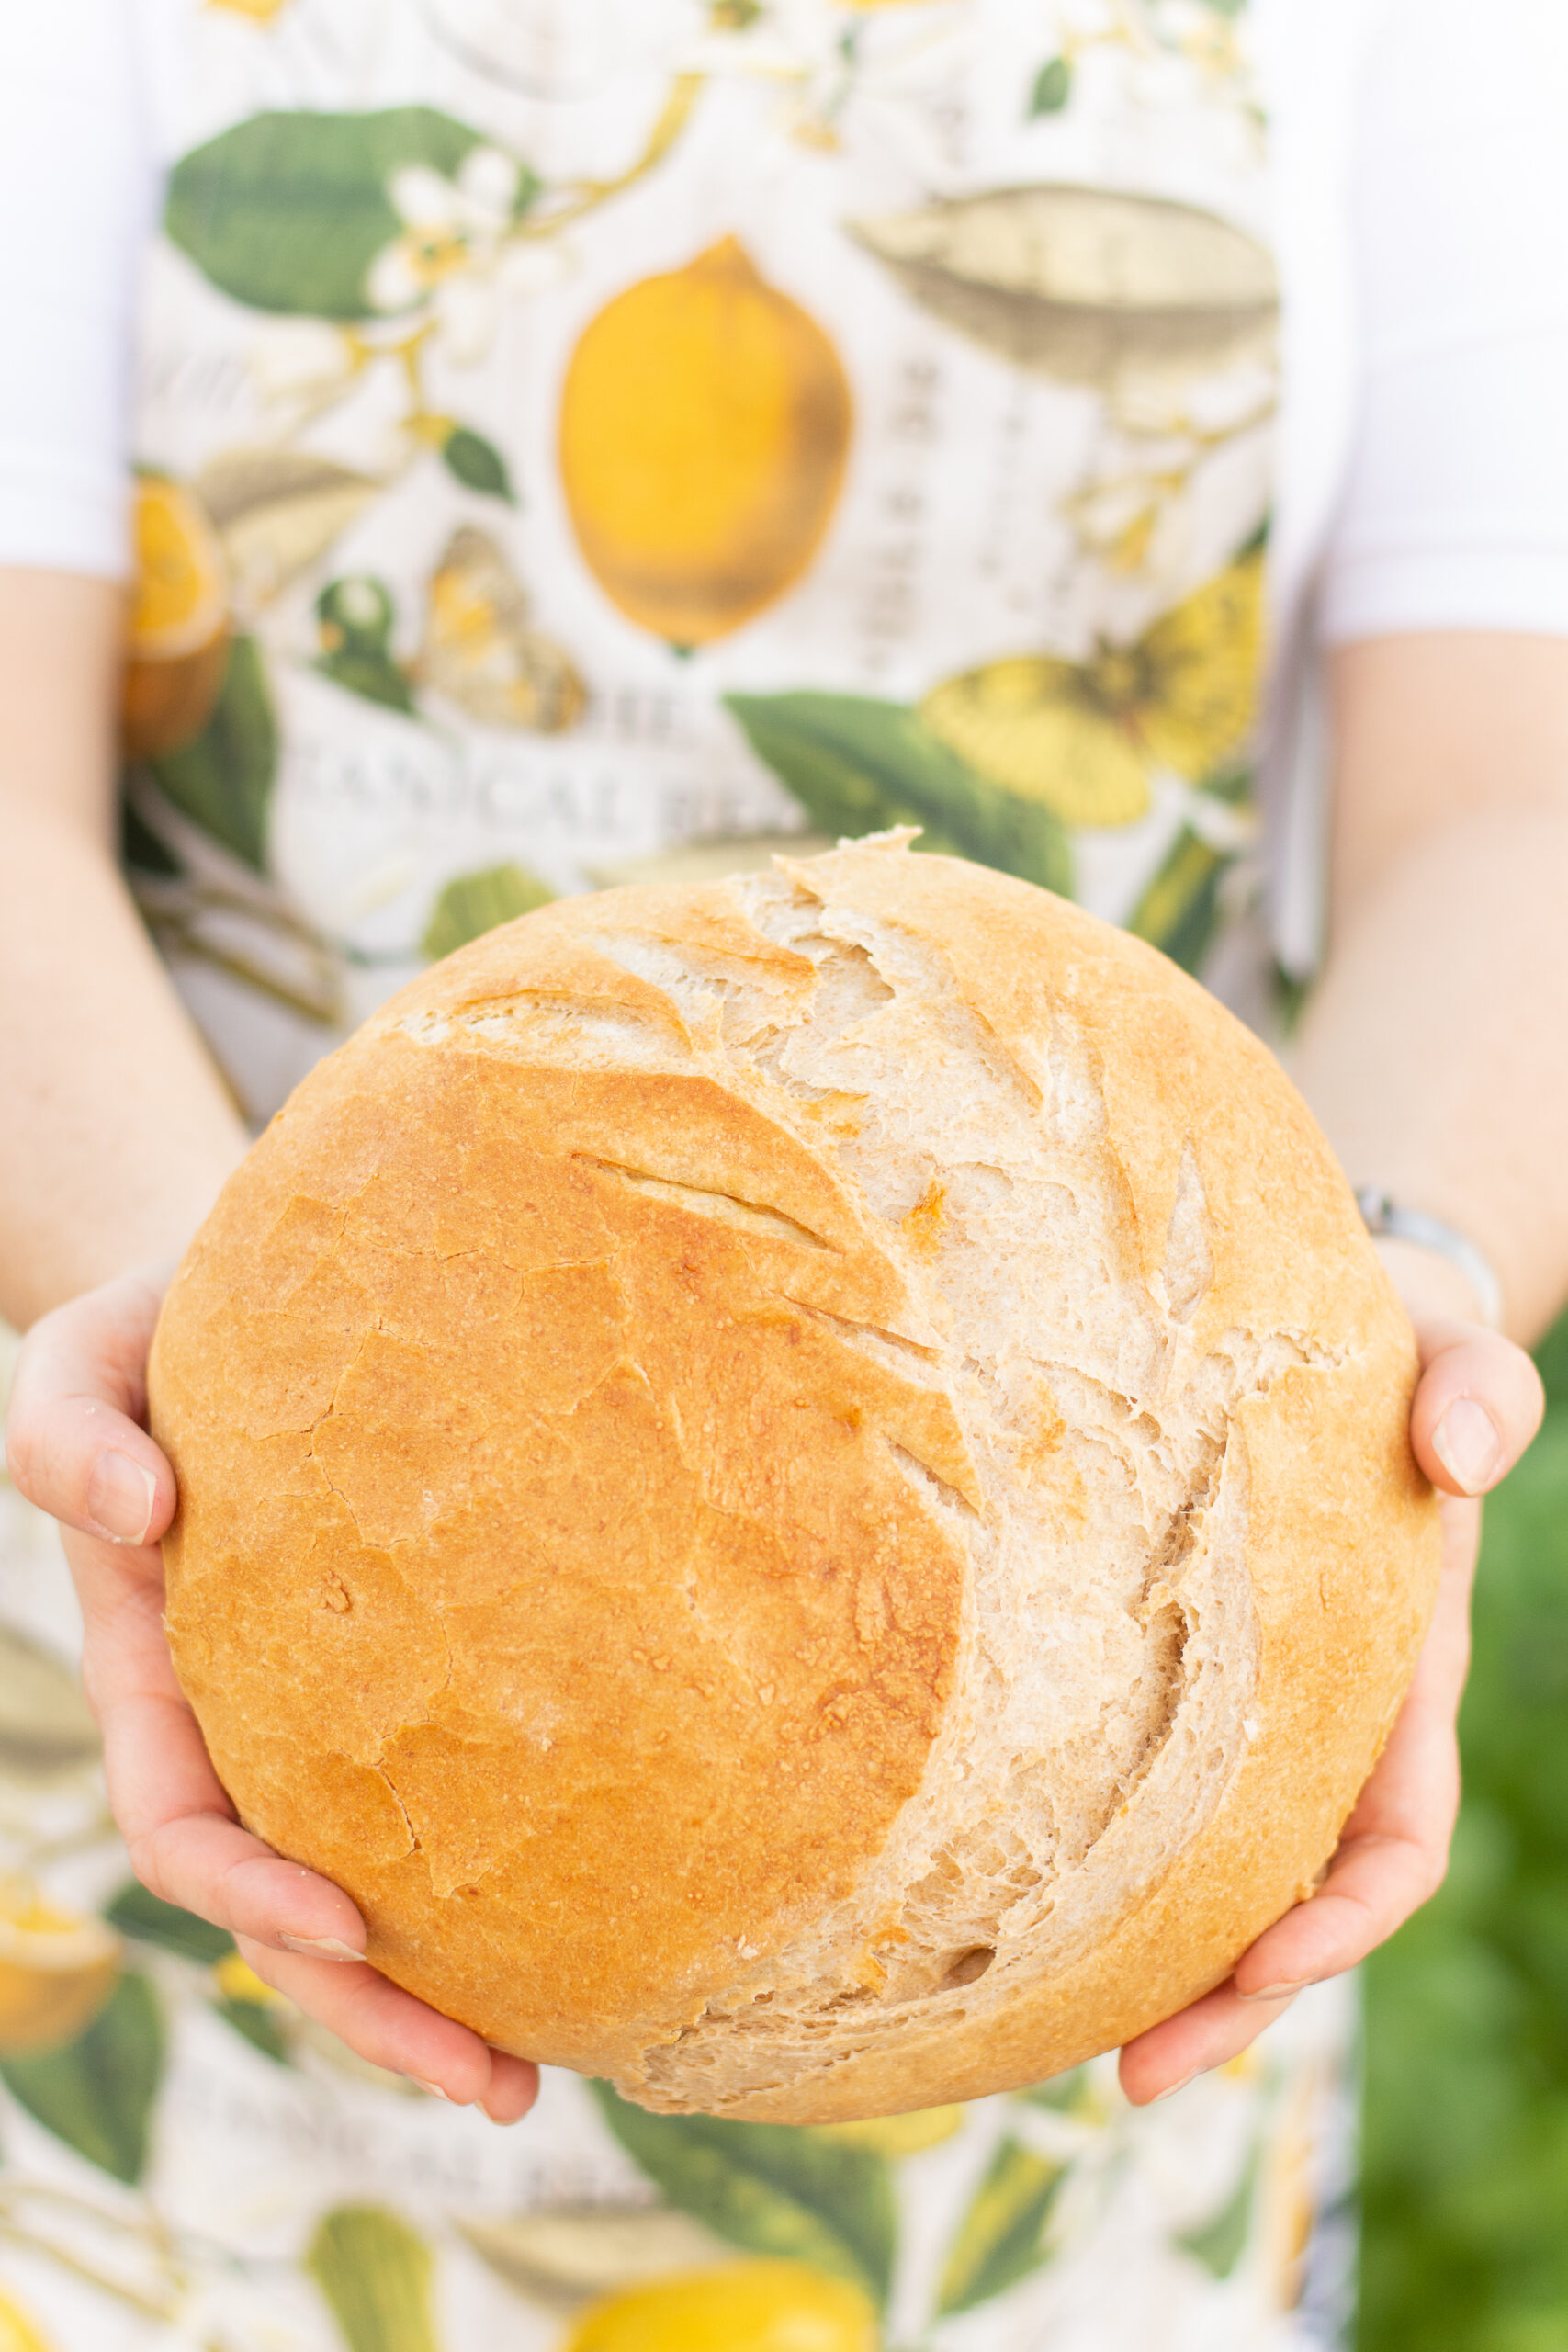 https://theprudenthomemaker.com/wp-content/uploads/2022/09/French-Bread-in-hands-The-Prudent-Homemaker-scaled.jpg